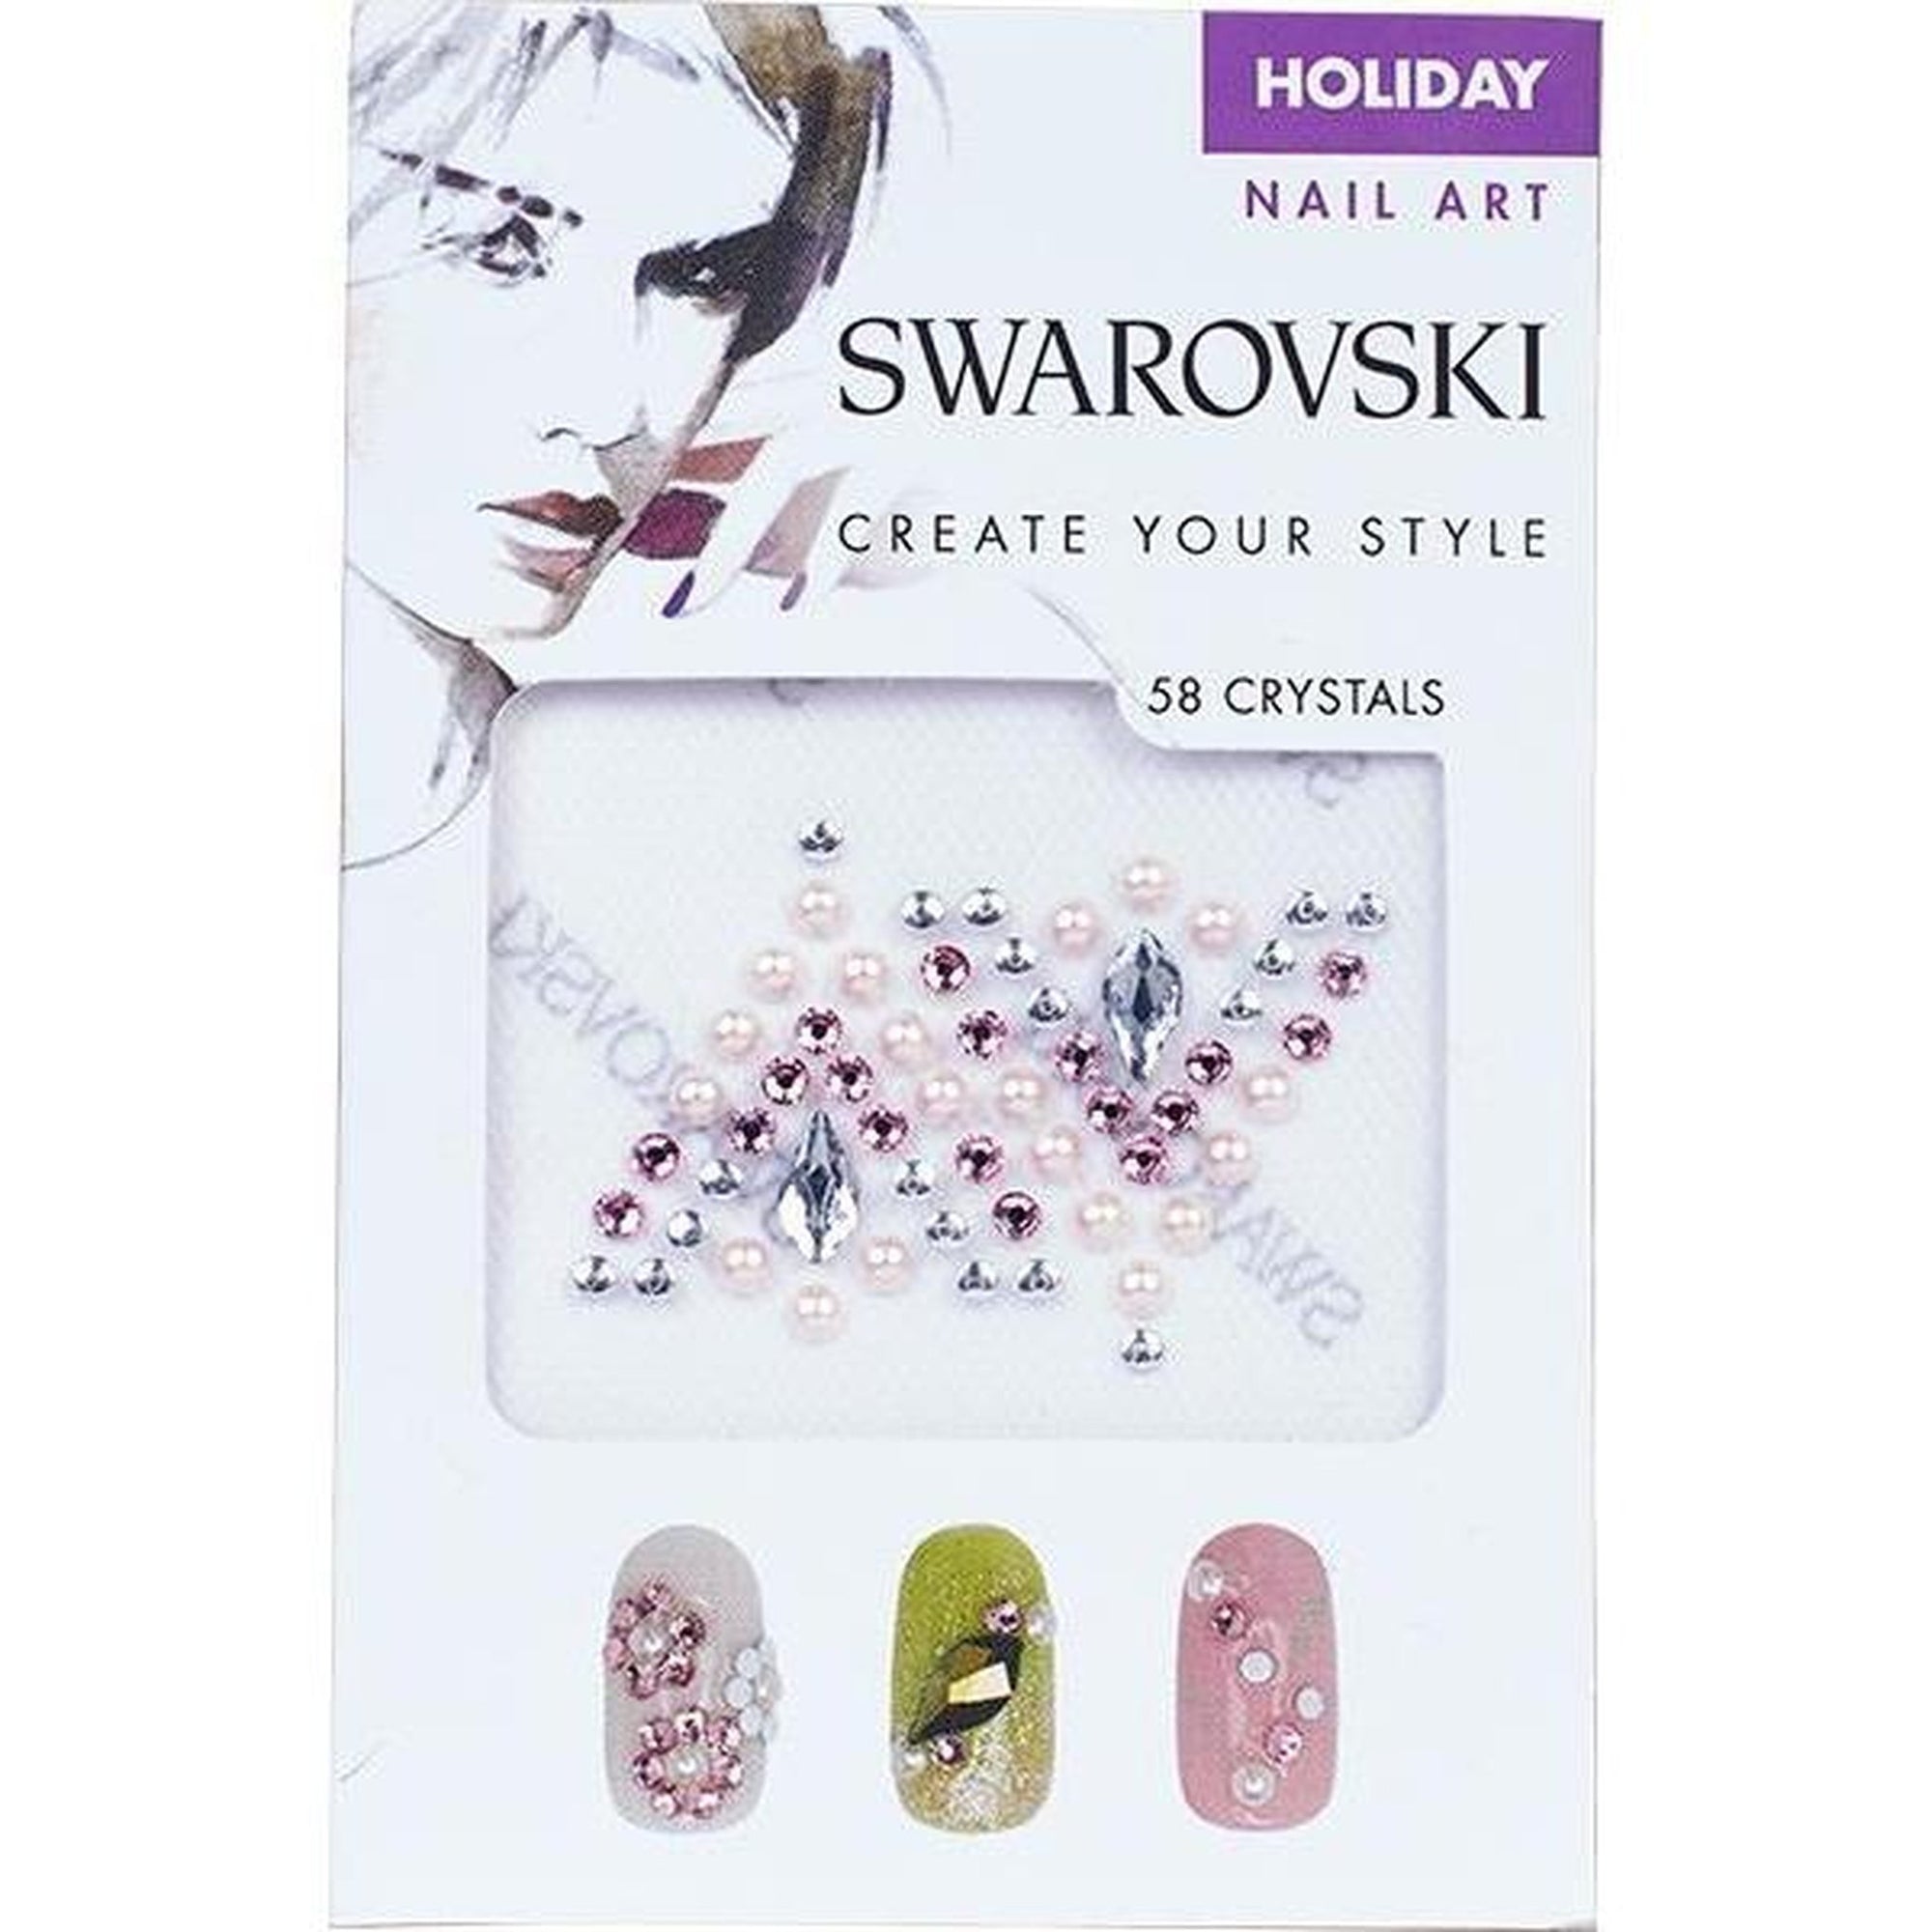 Swarovski for nail art and more